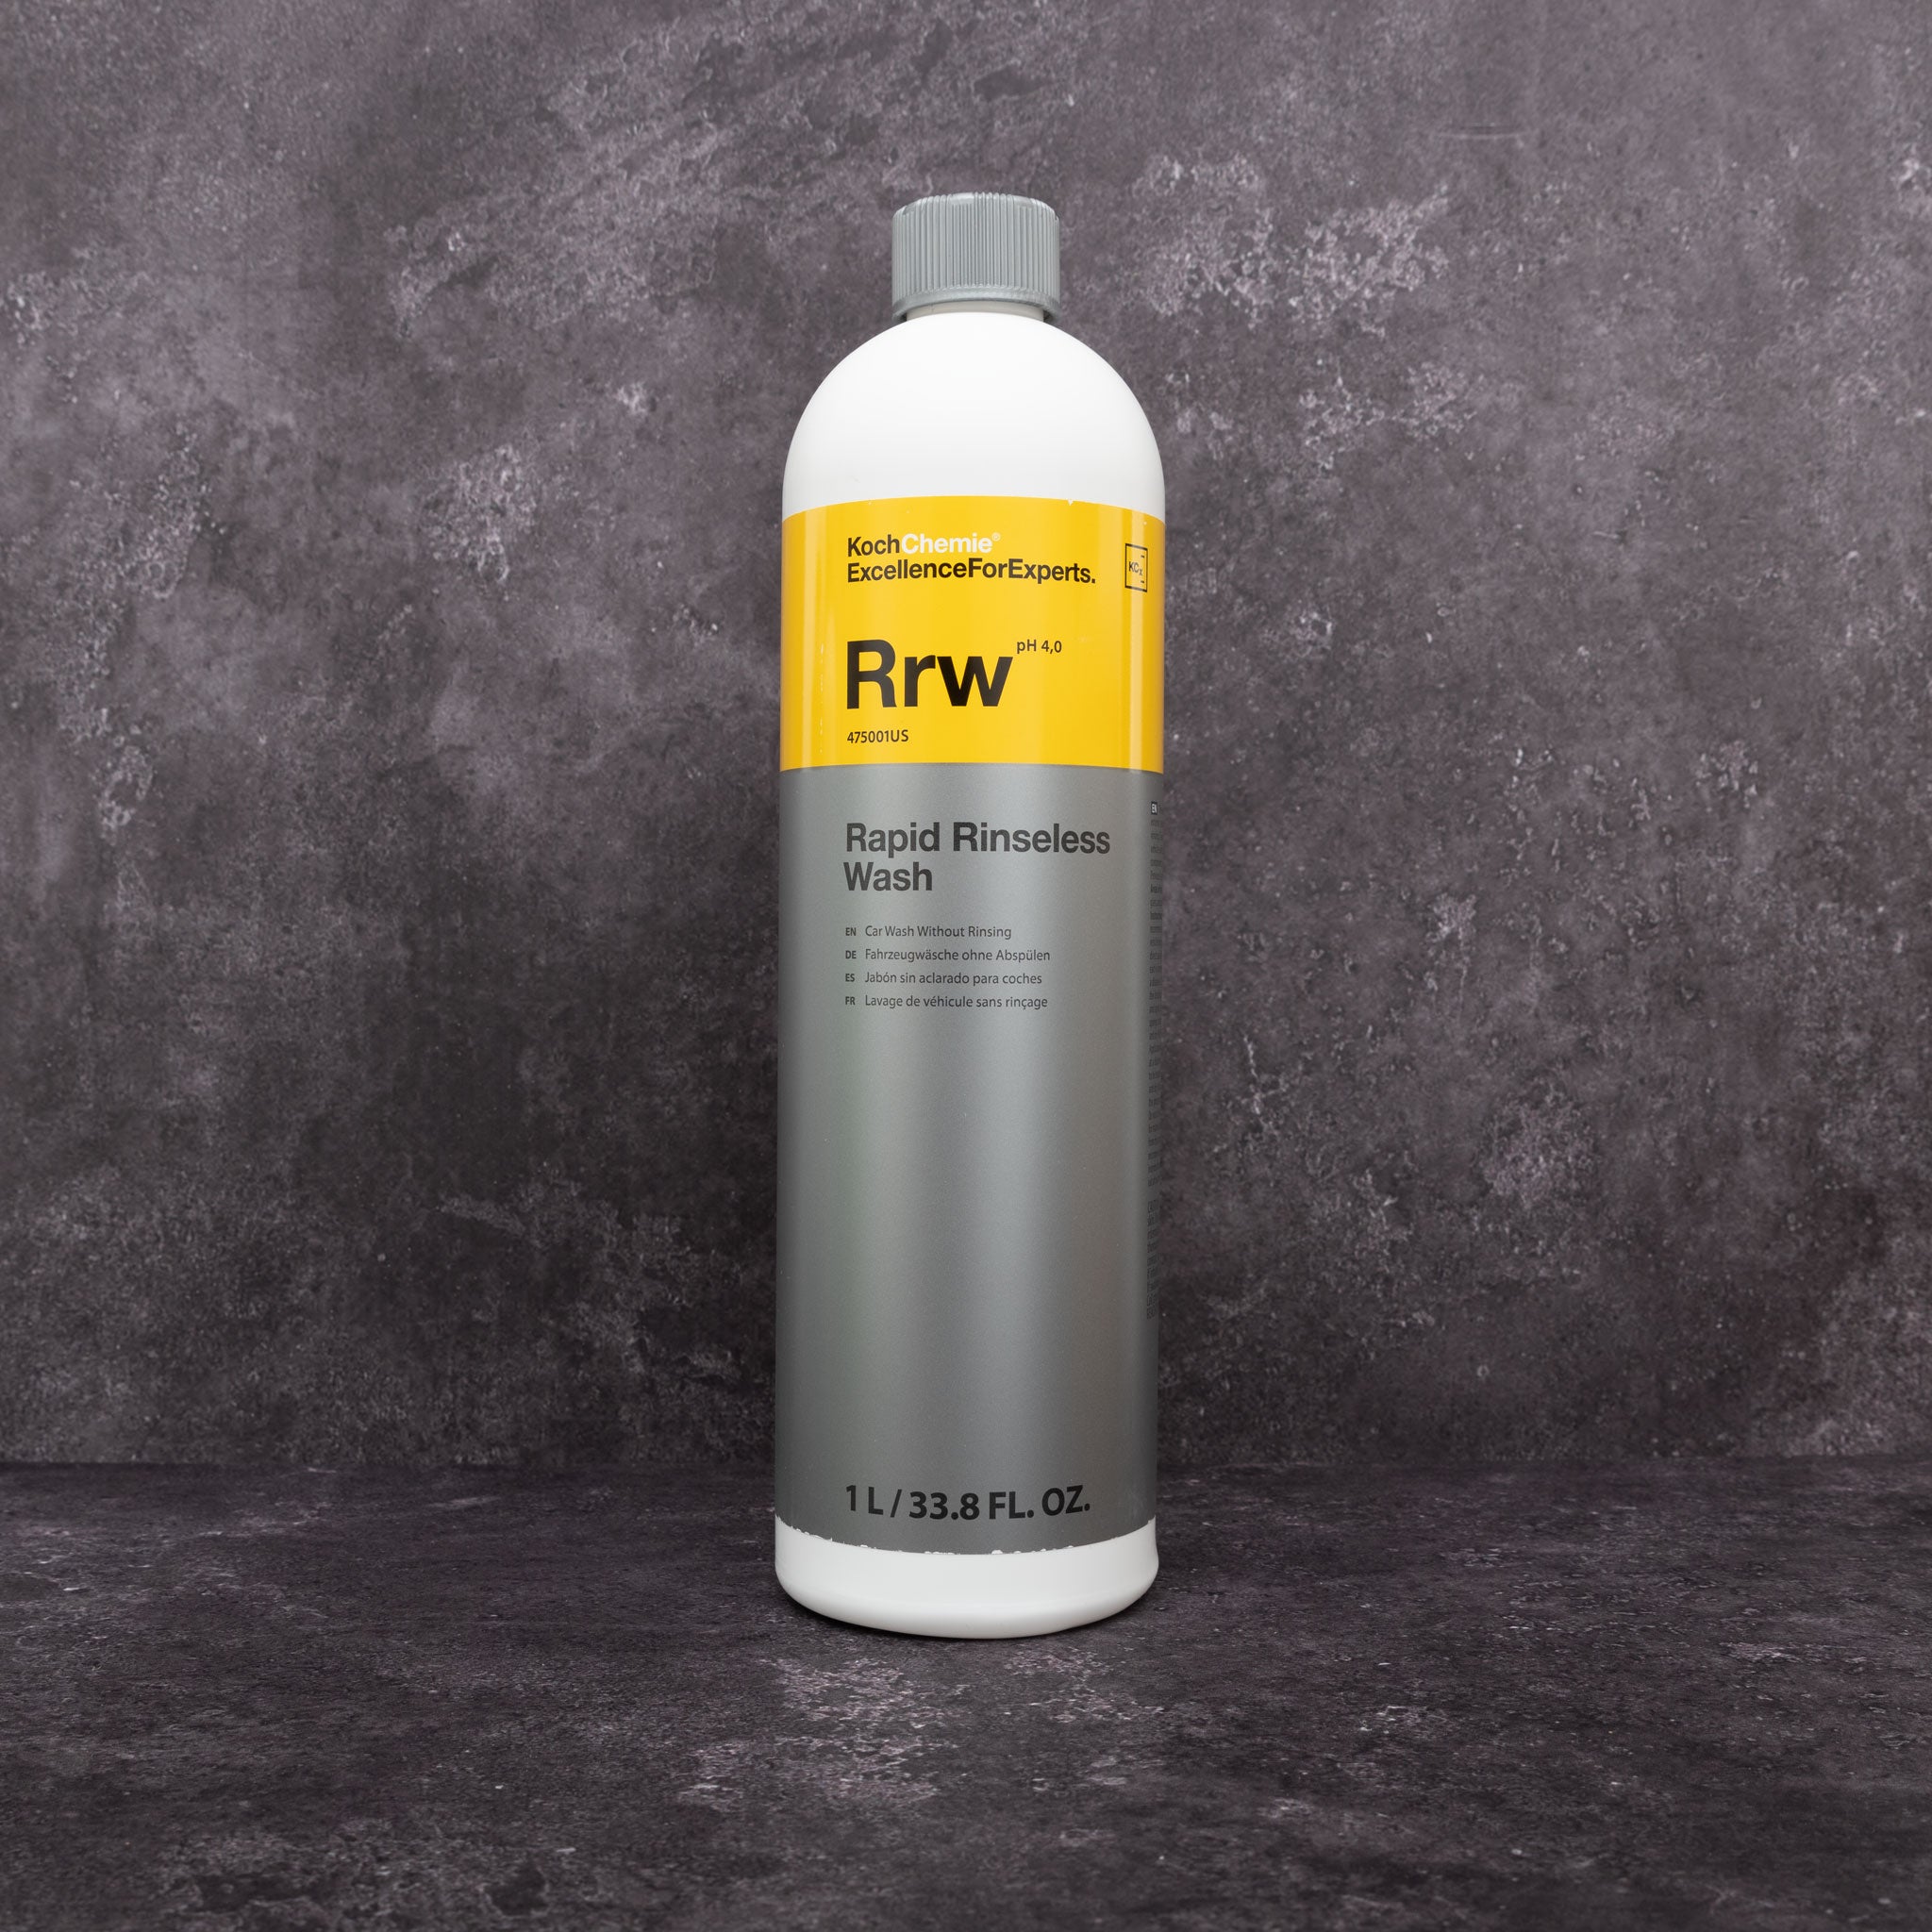 Rapid Rinseless Wash (Rrw)